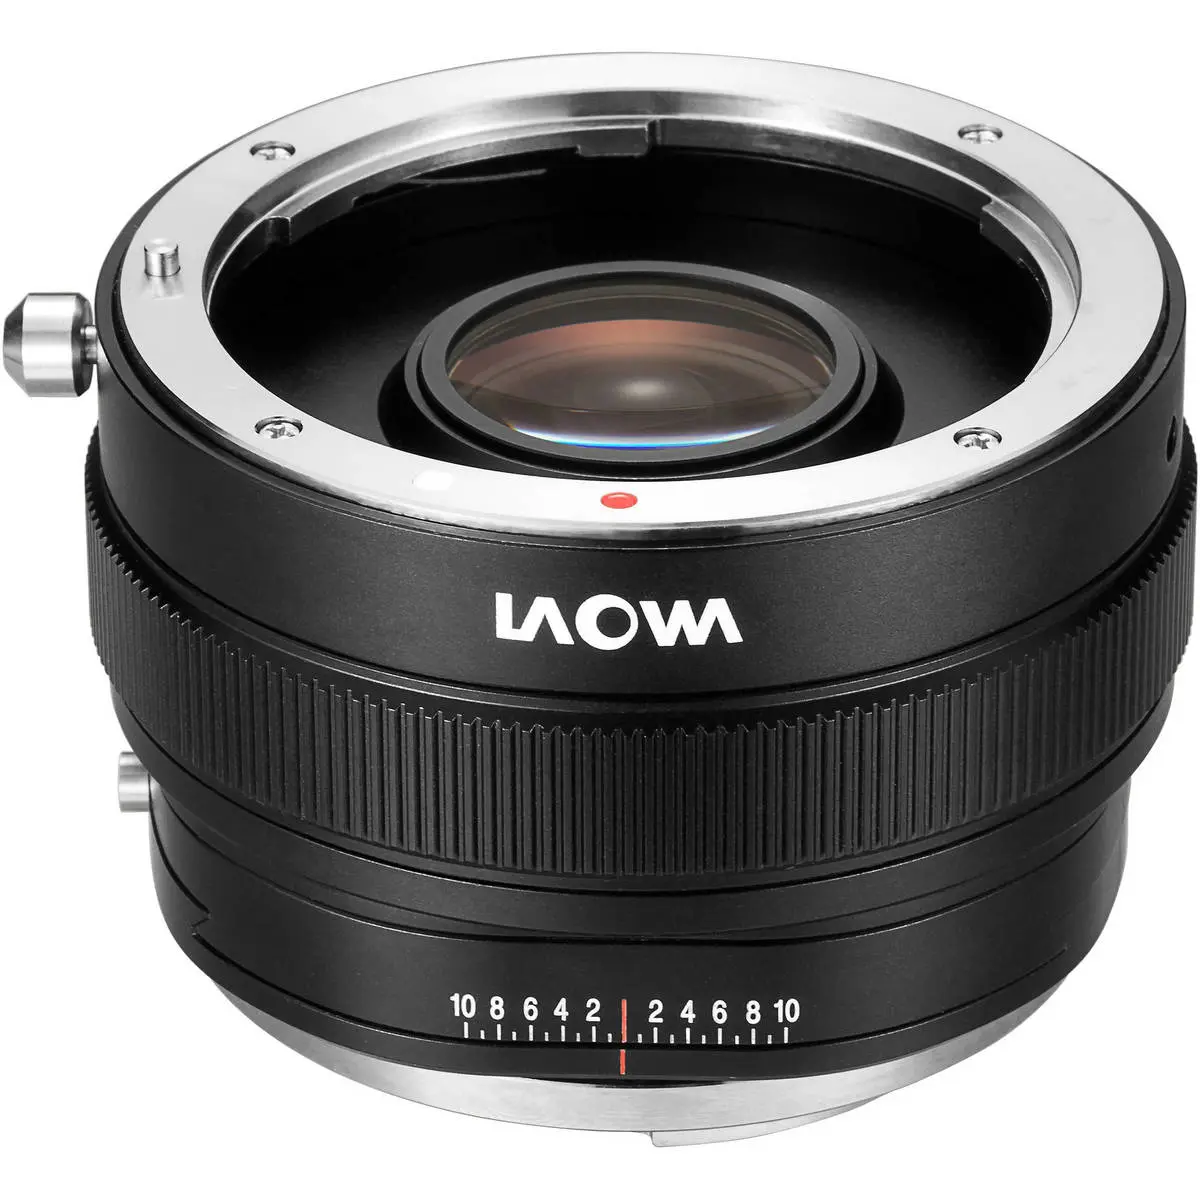 2. LAOWA Lens Magic Shift Converter (MSC) Nikon